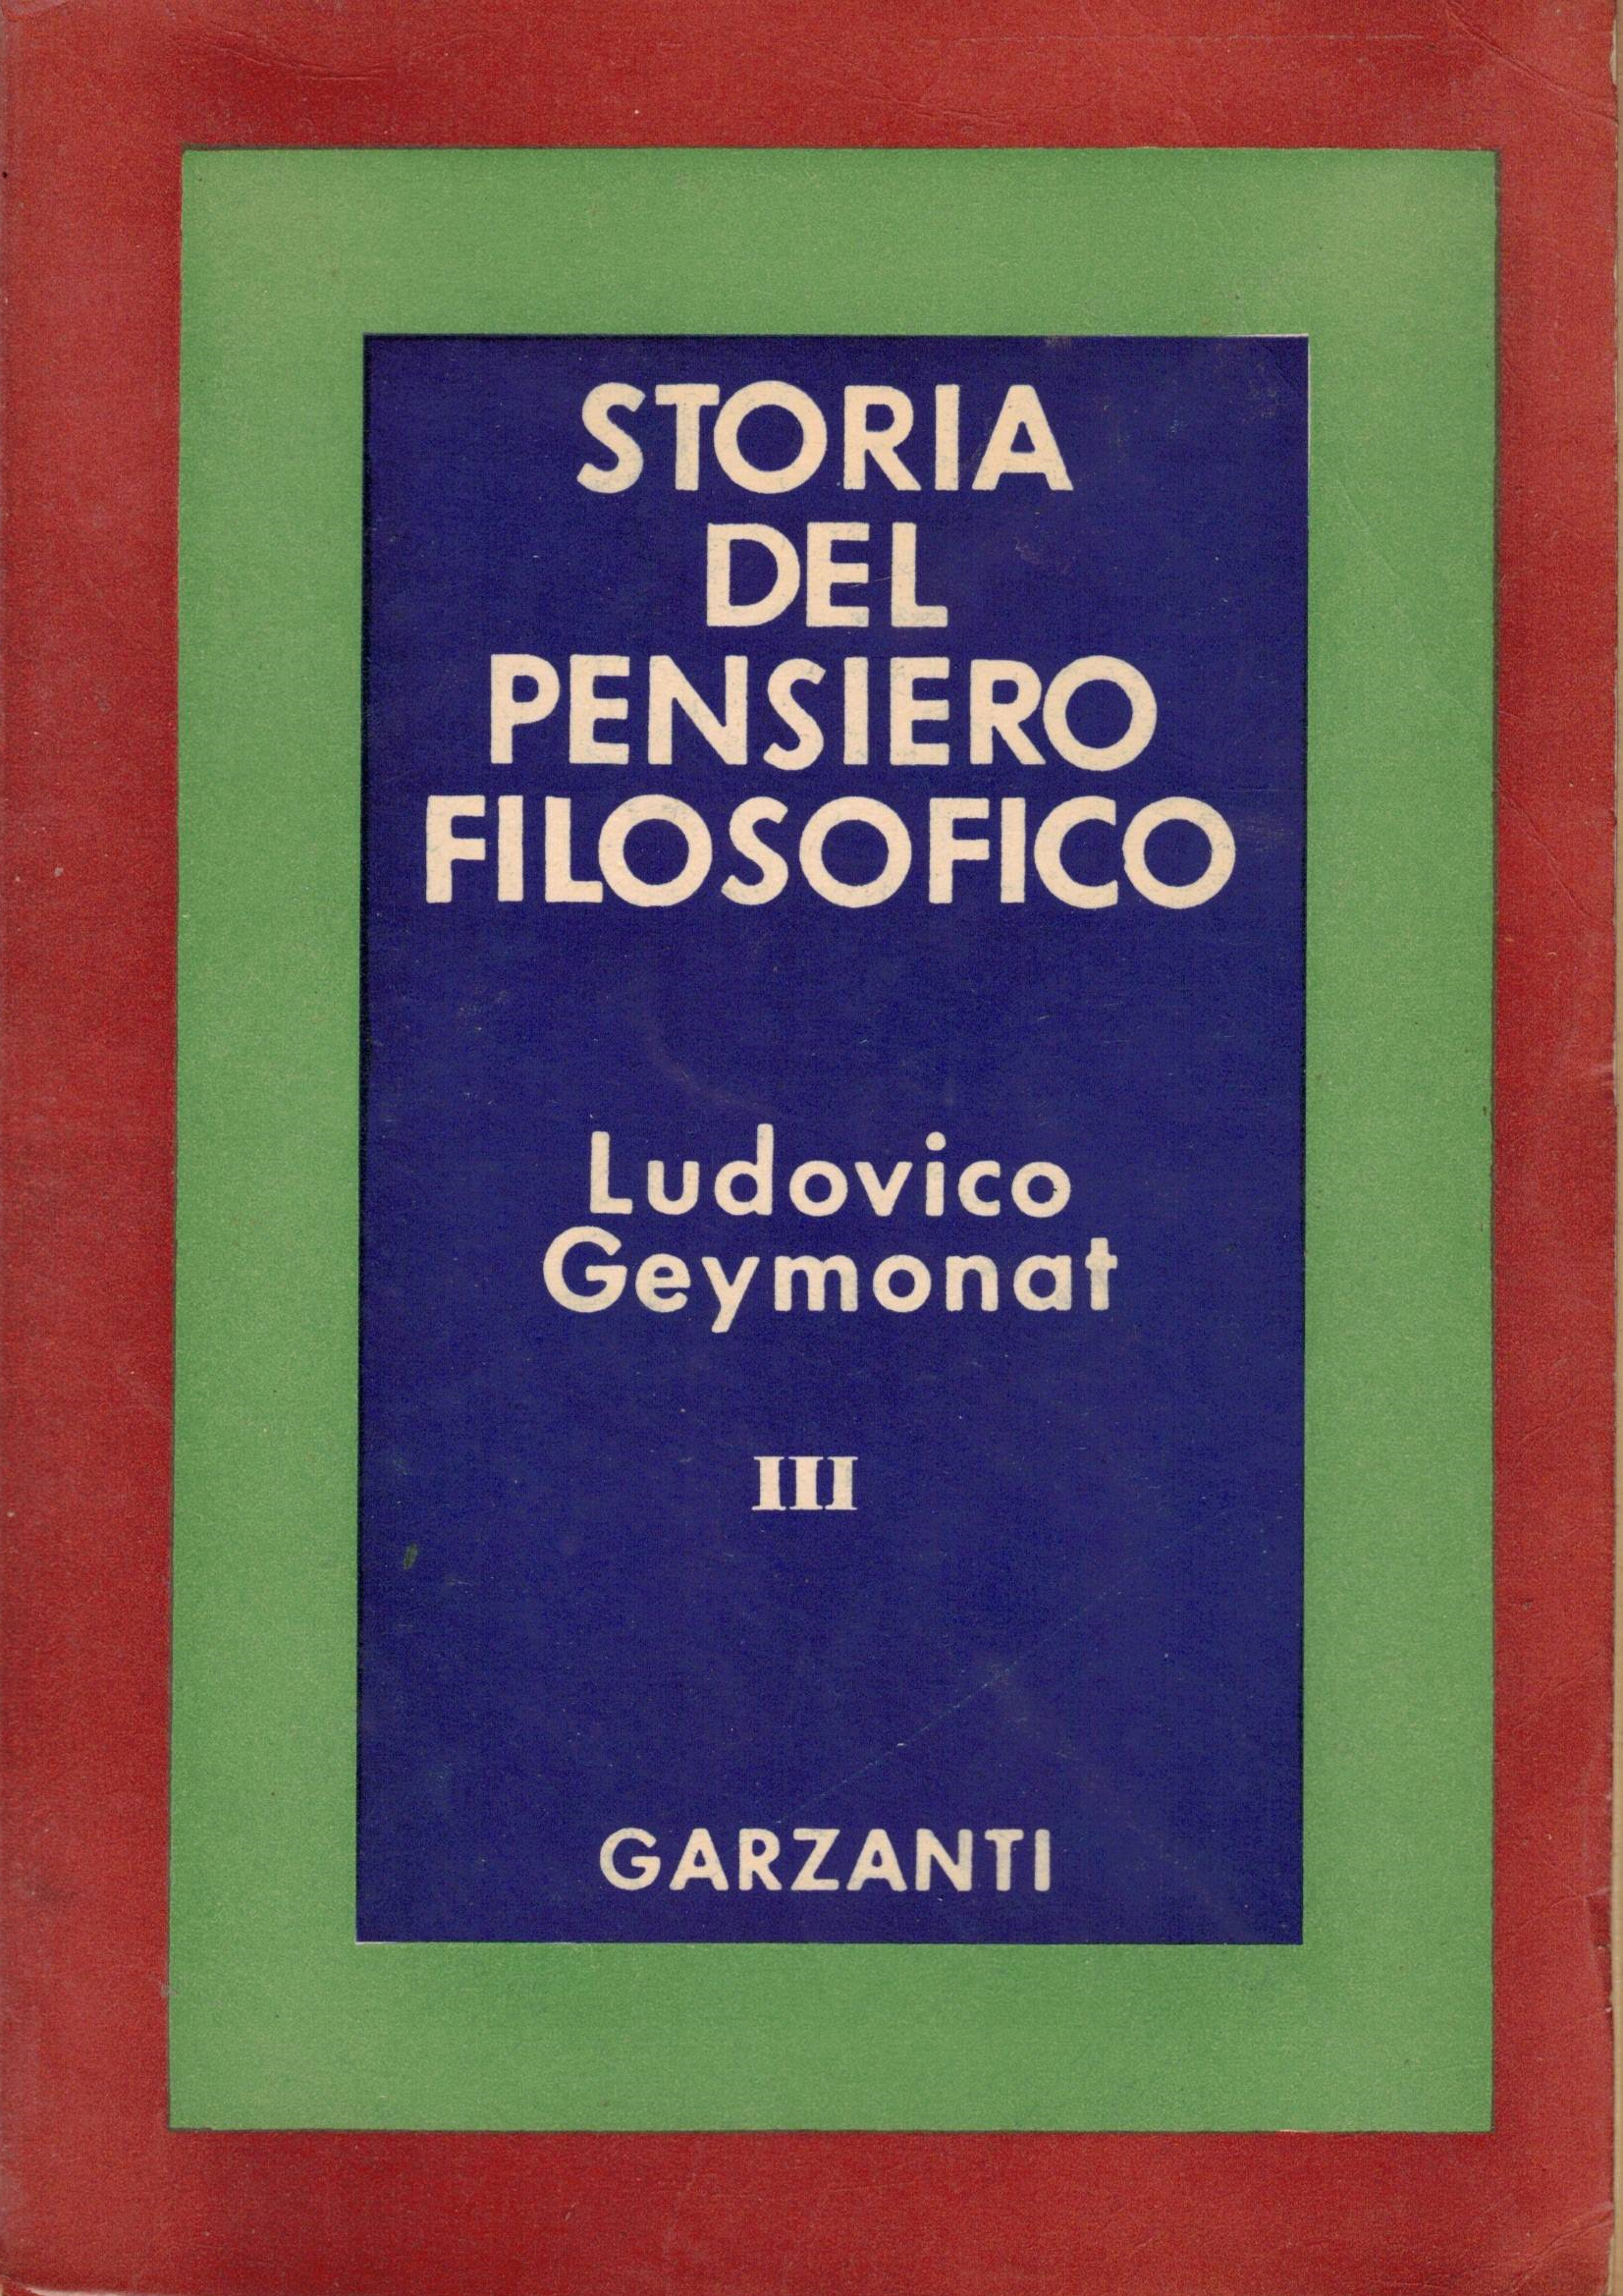 Storia del pensiero filosofico I-II-III, Ludovico Geymonat